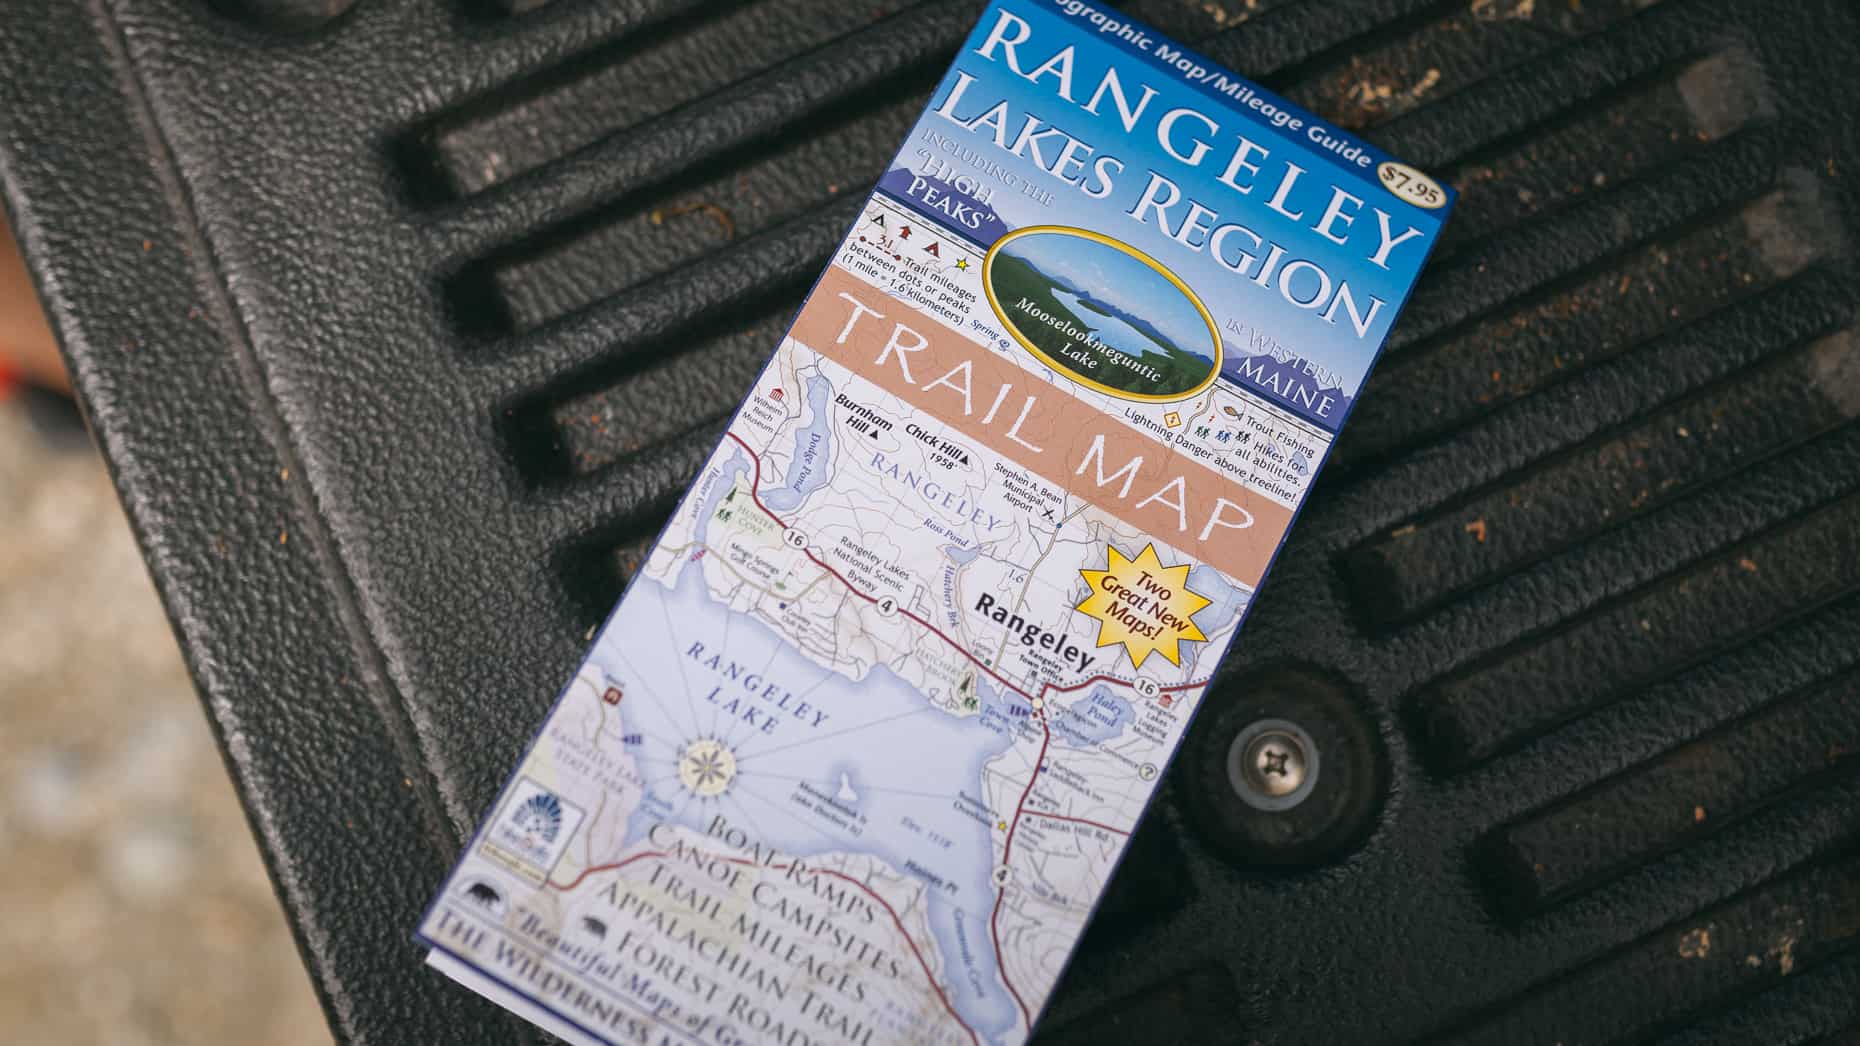 Rangeley Lakes Region trail map.